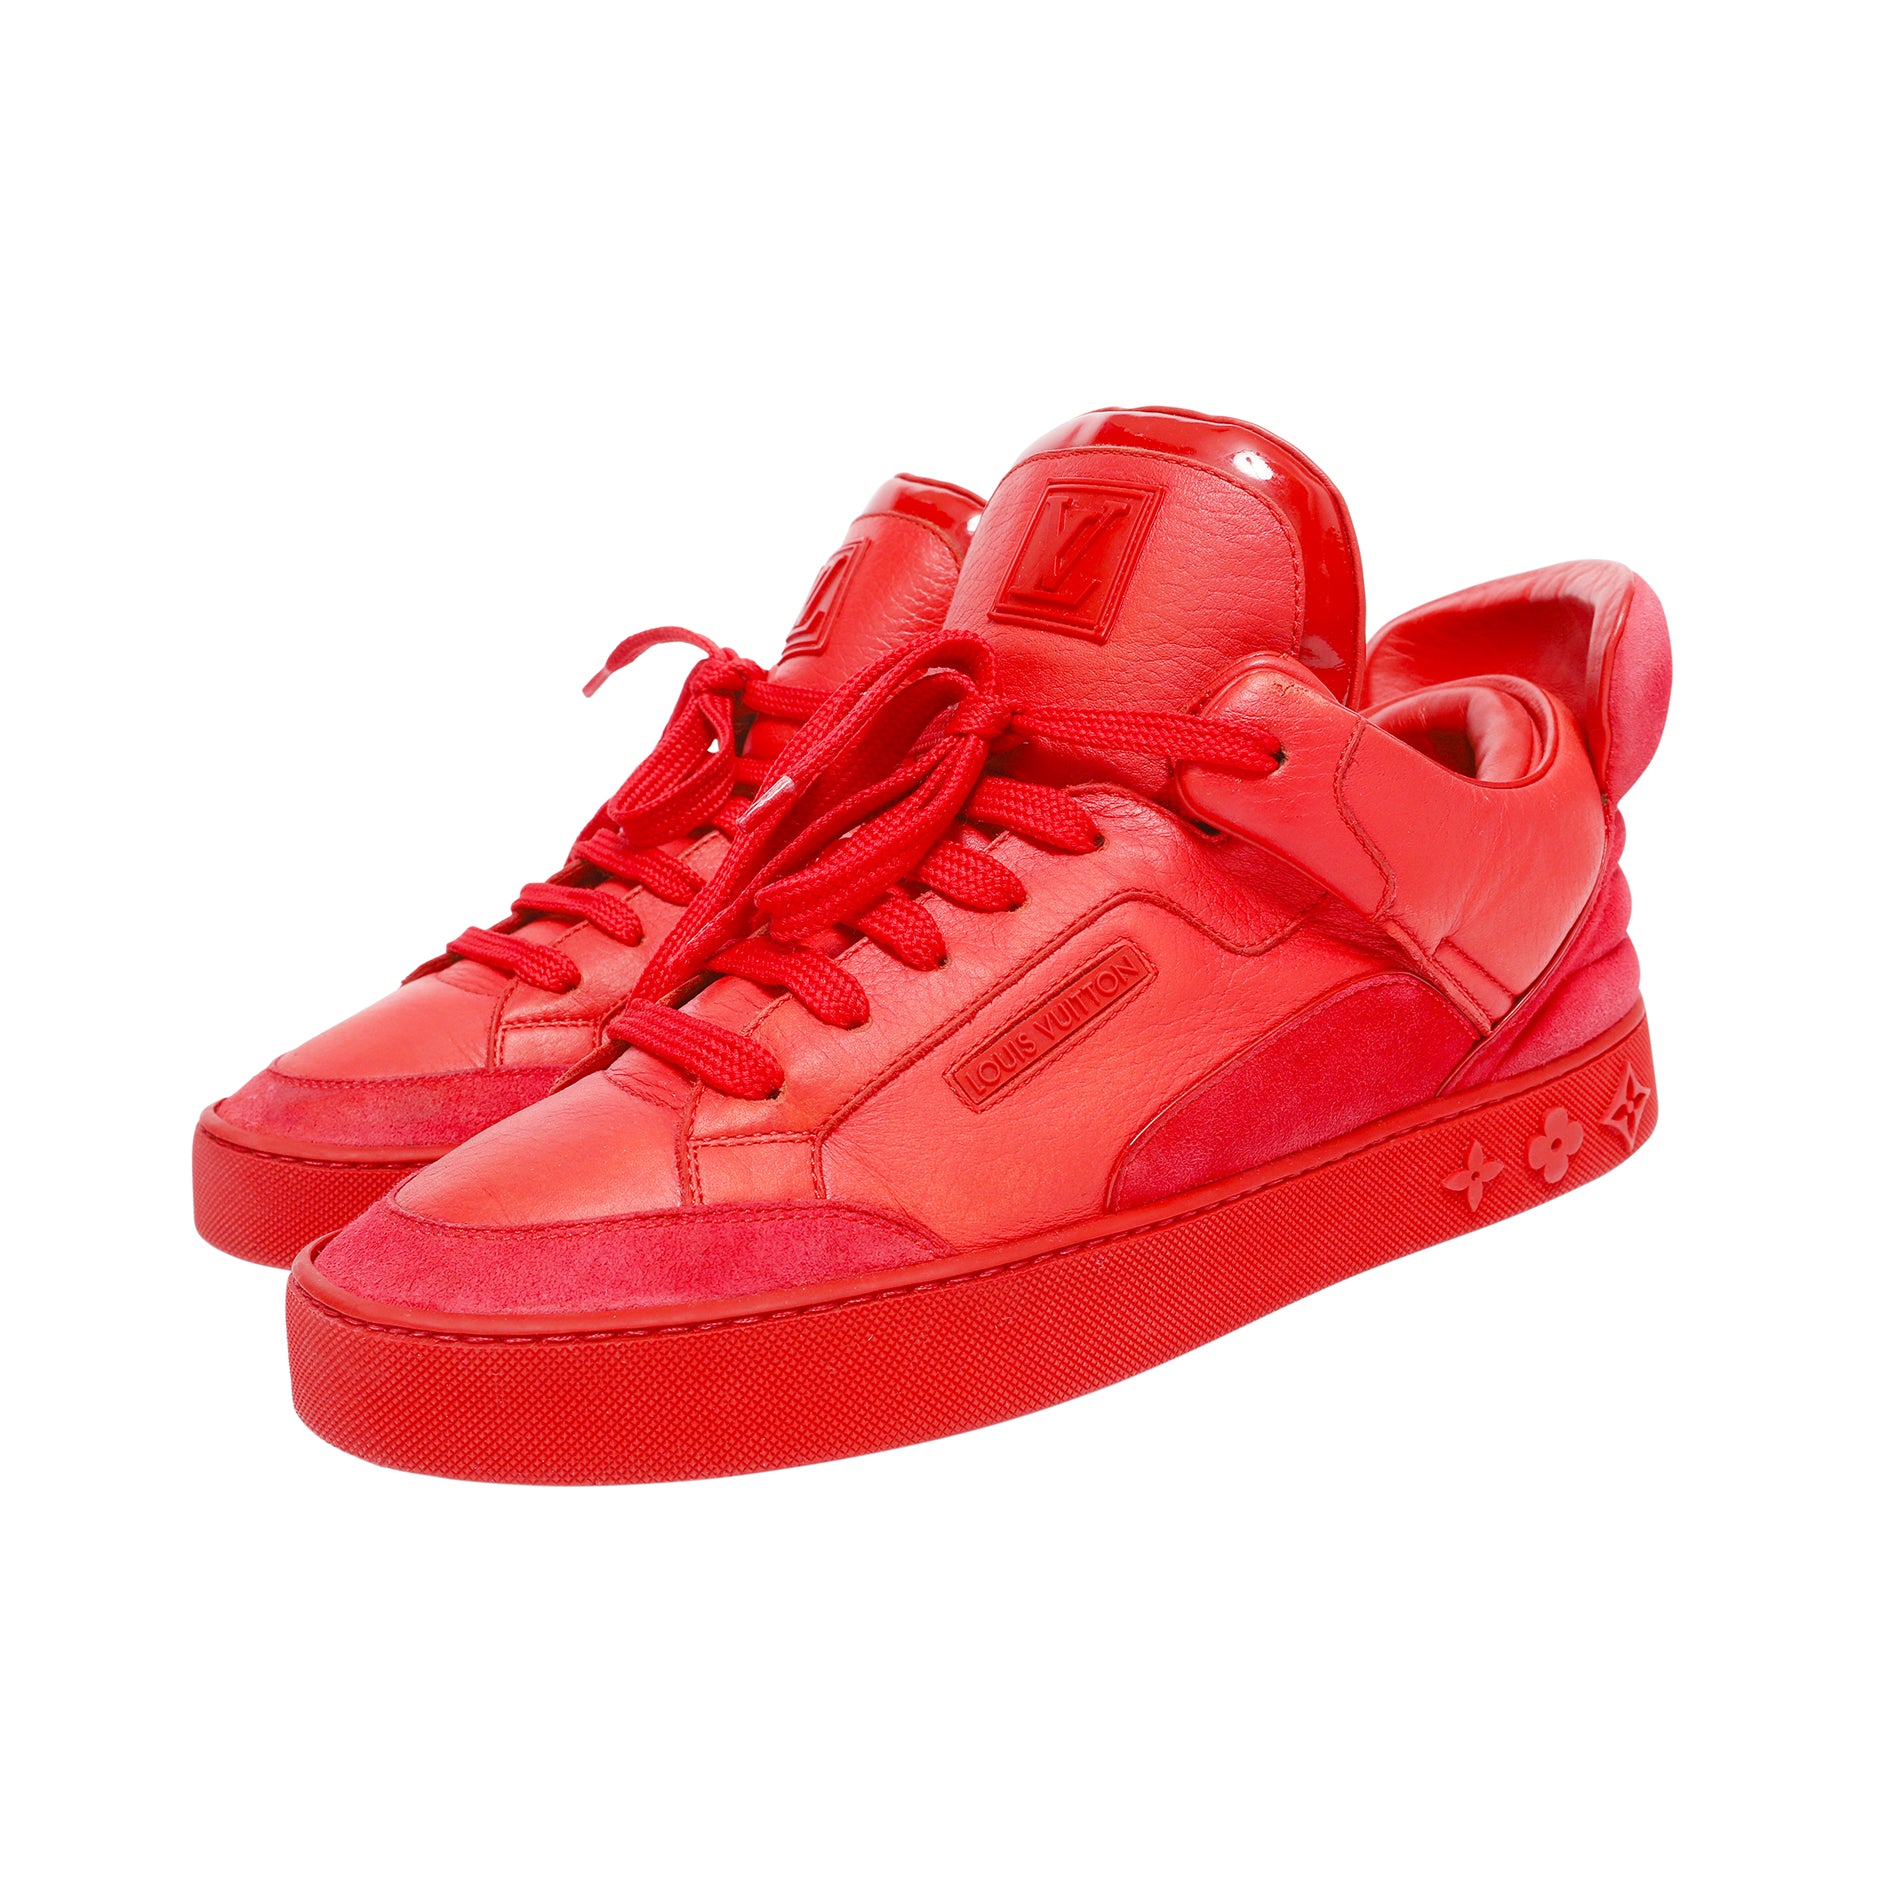 Kanye West x Louis Vuitton - Hi Top & Low Top Sneakers